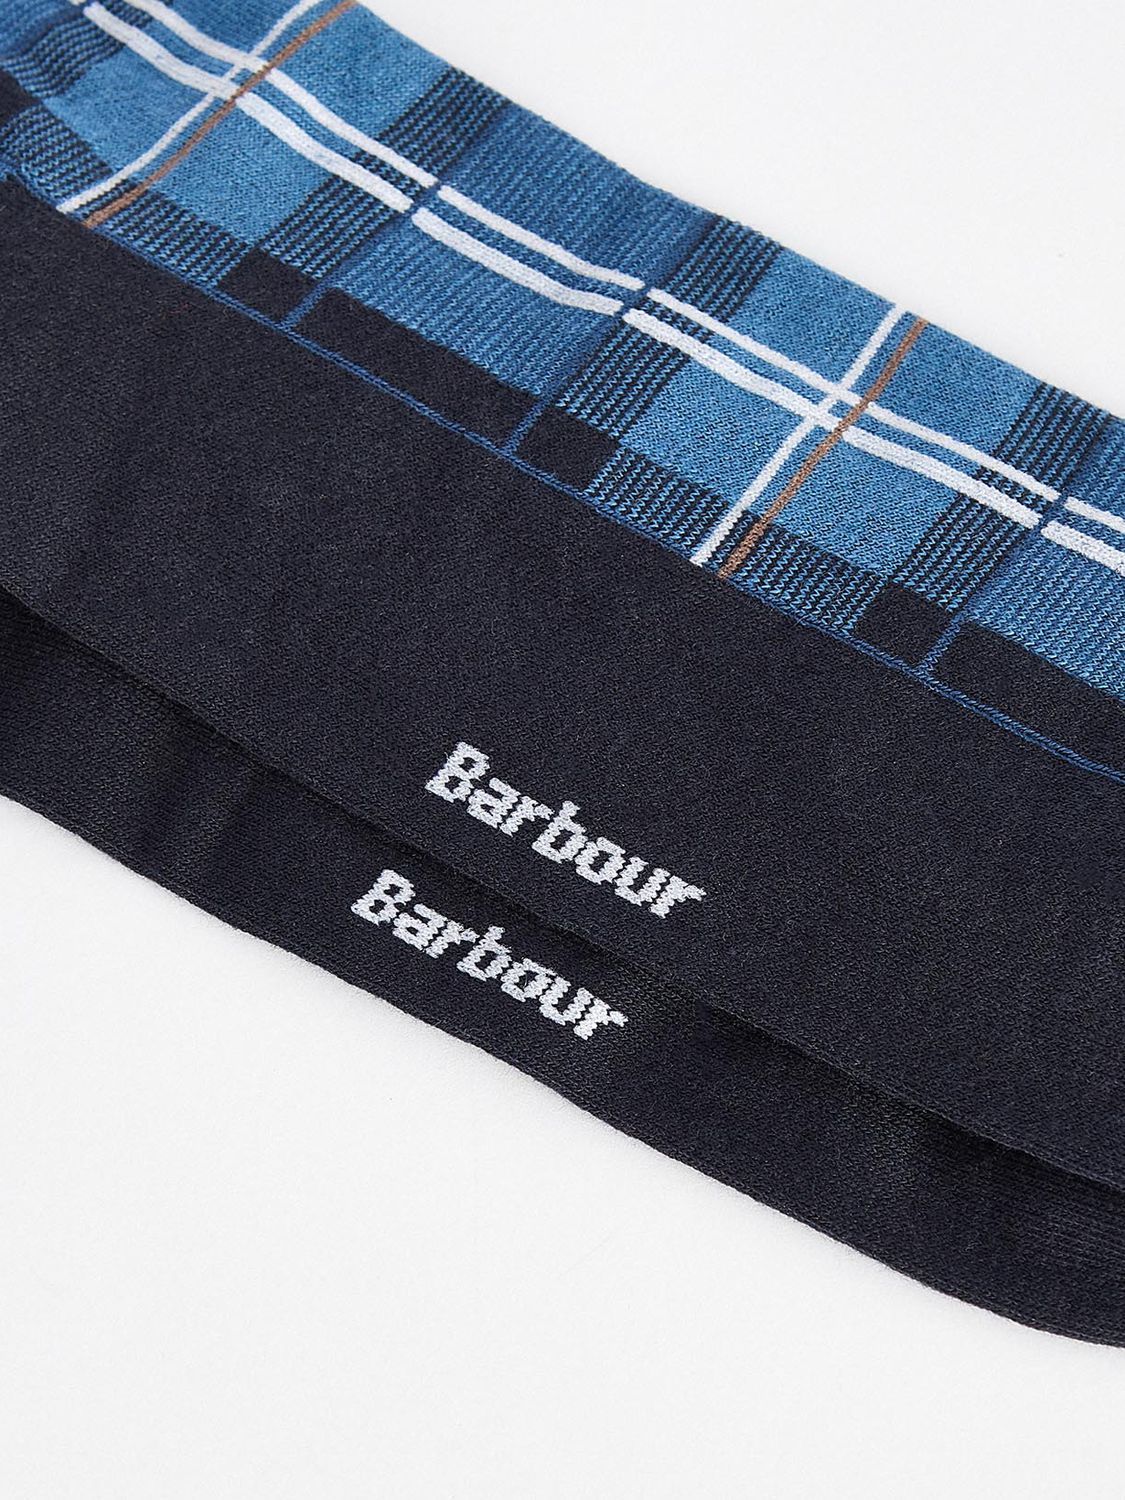 Buy Barbour Blyth Tartan Socks, Berwick Blue Online at johnlewis.com